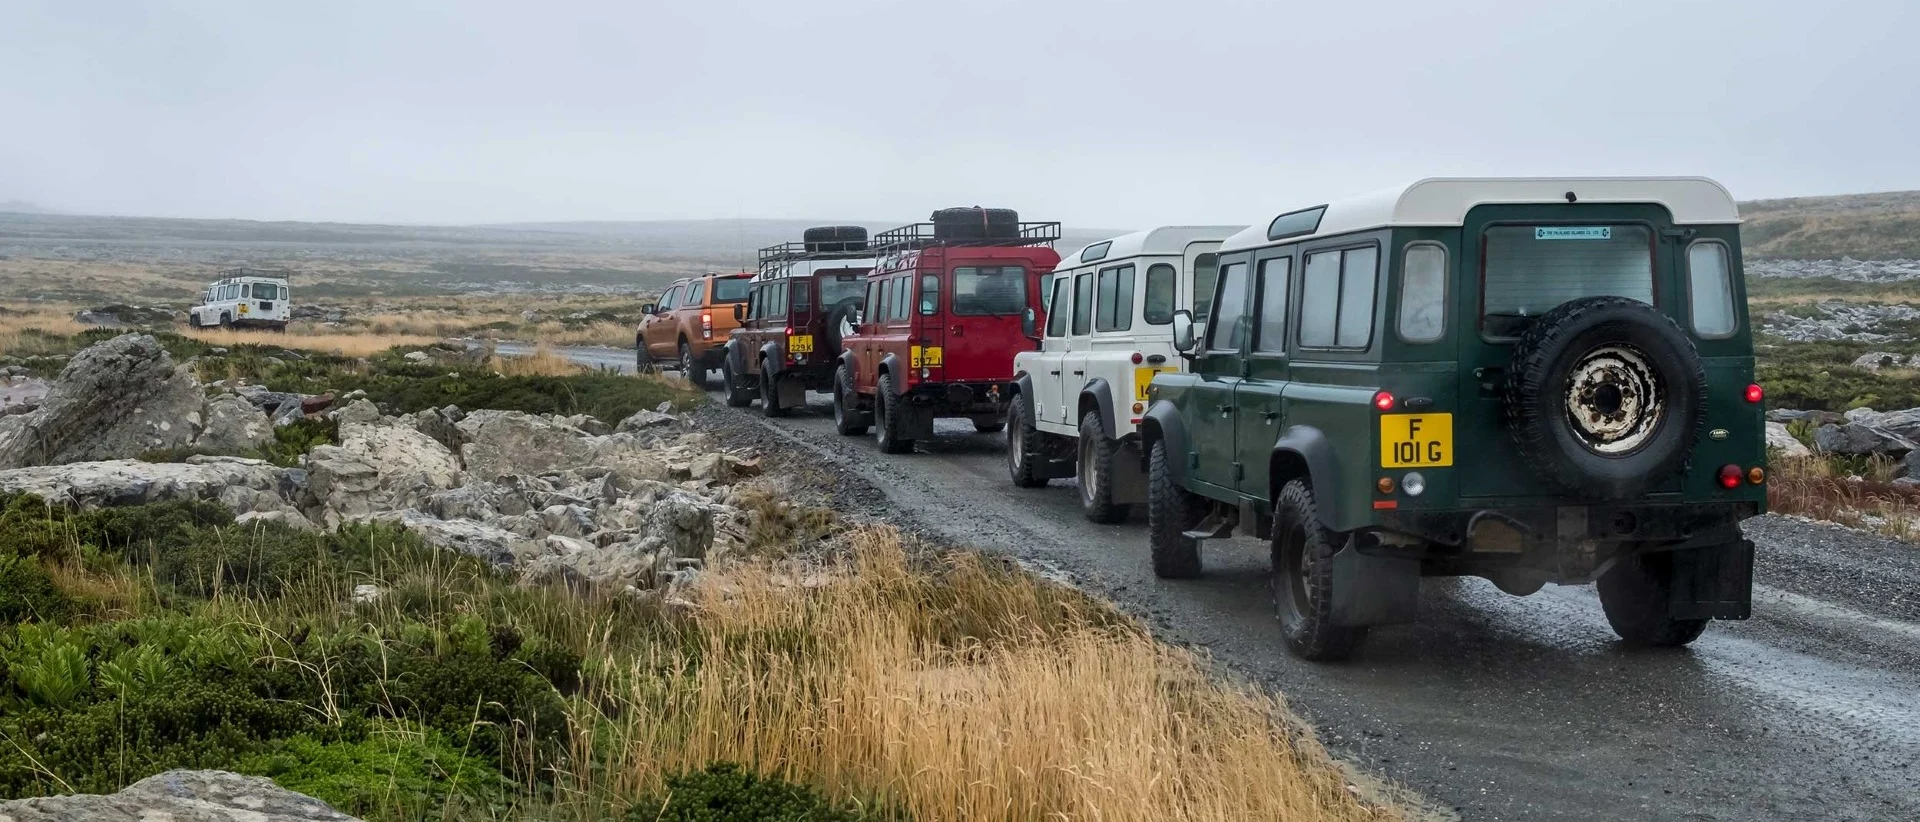 Port Stanley: Falklandsöarnas kronjuvel